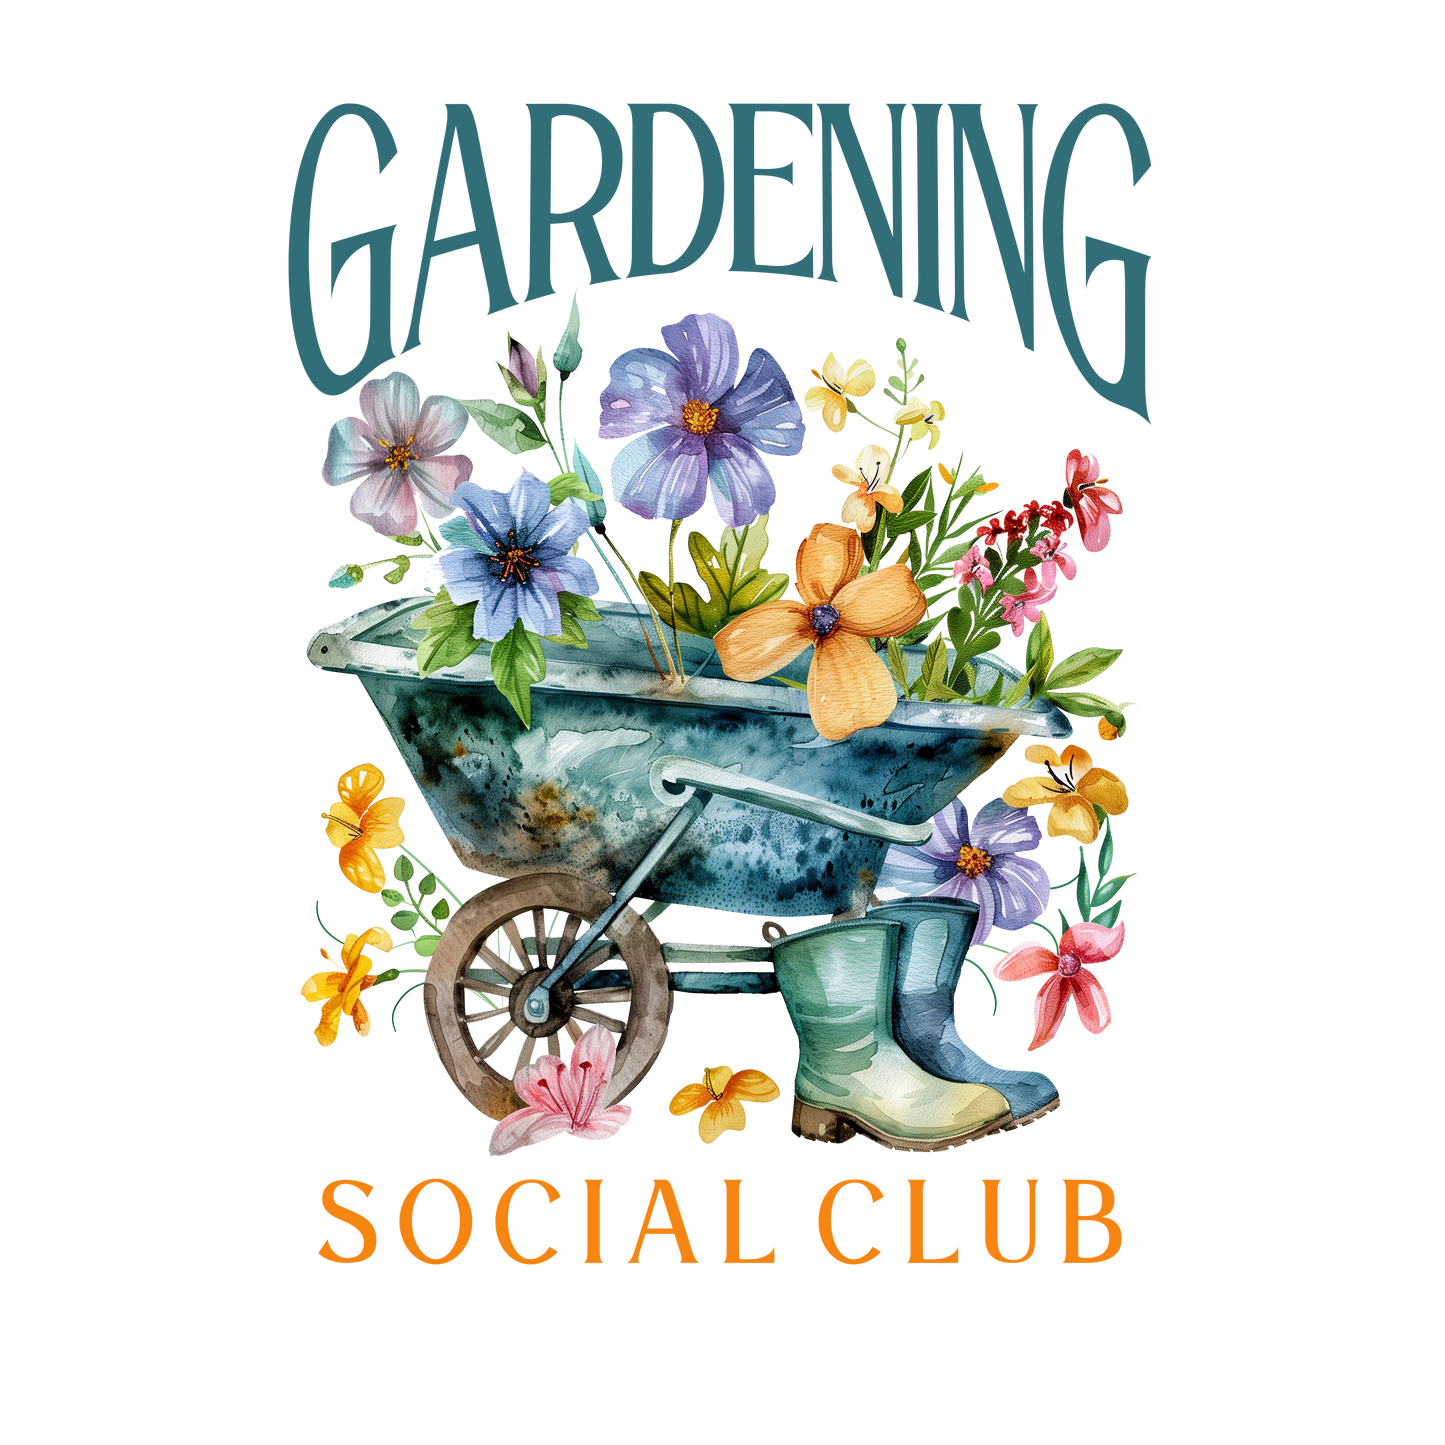 Gardening social club